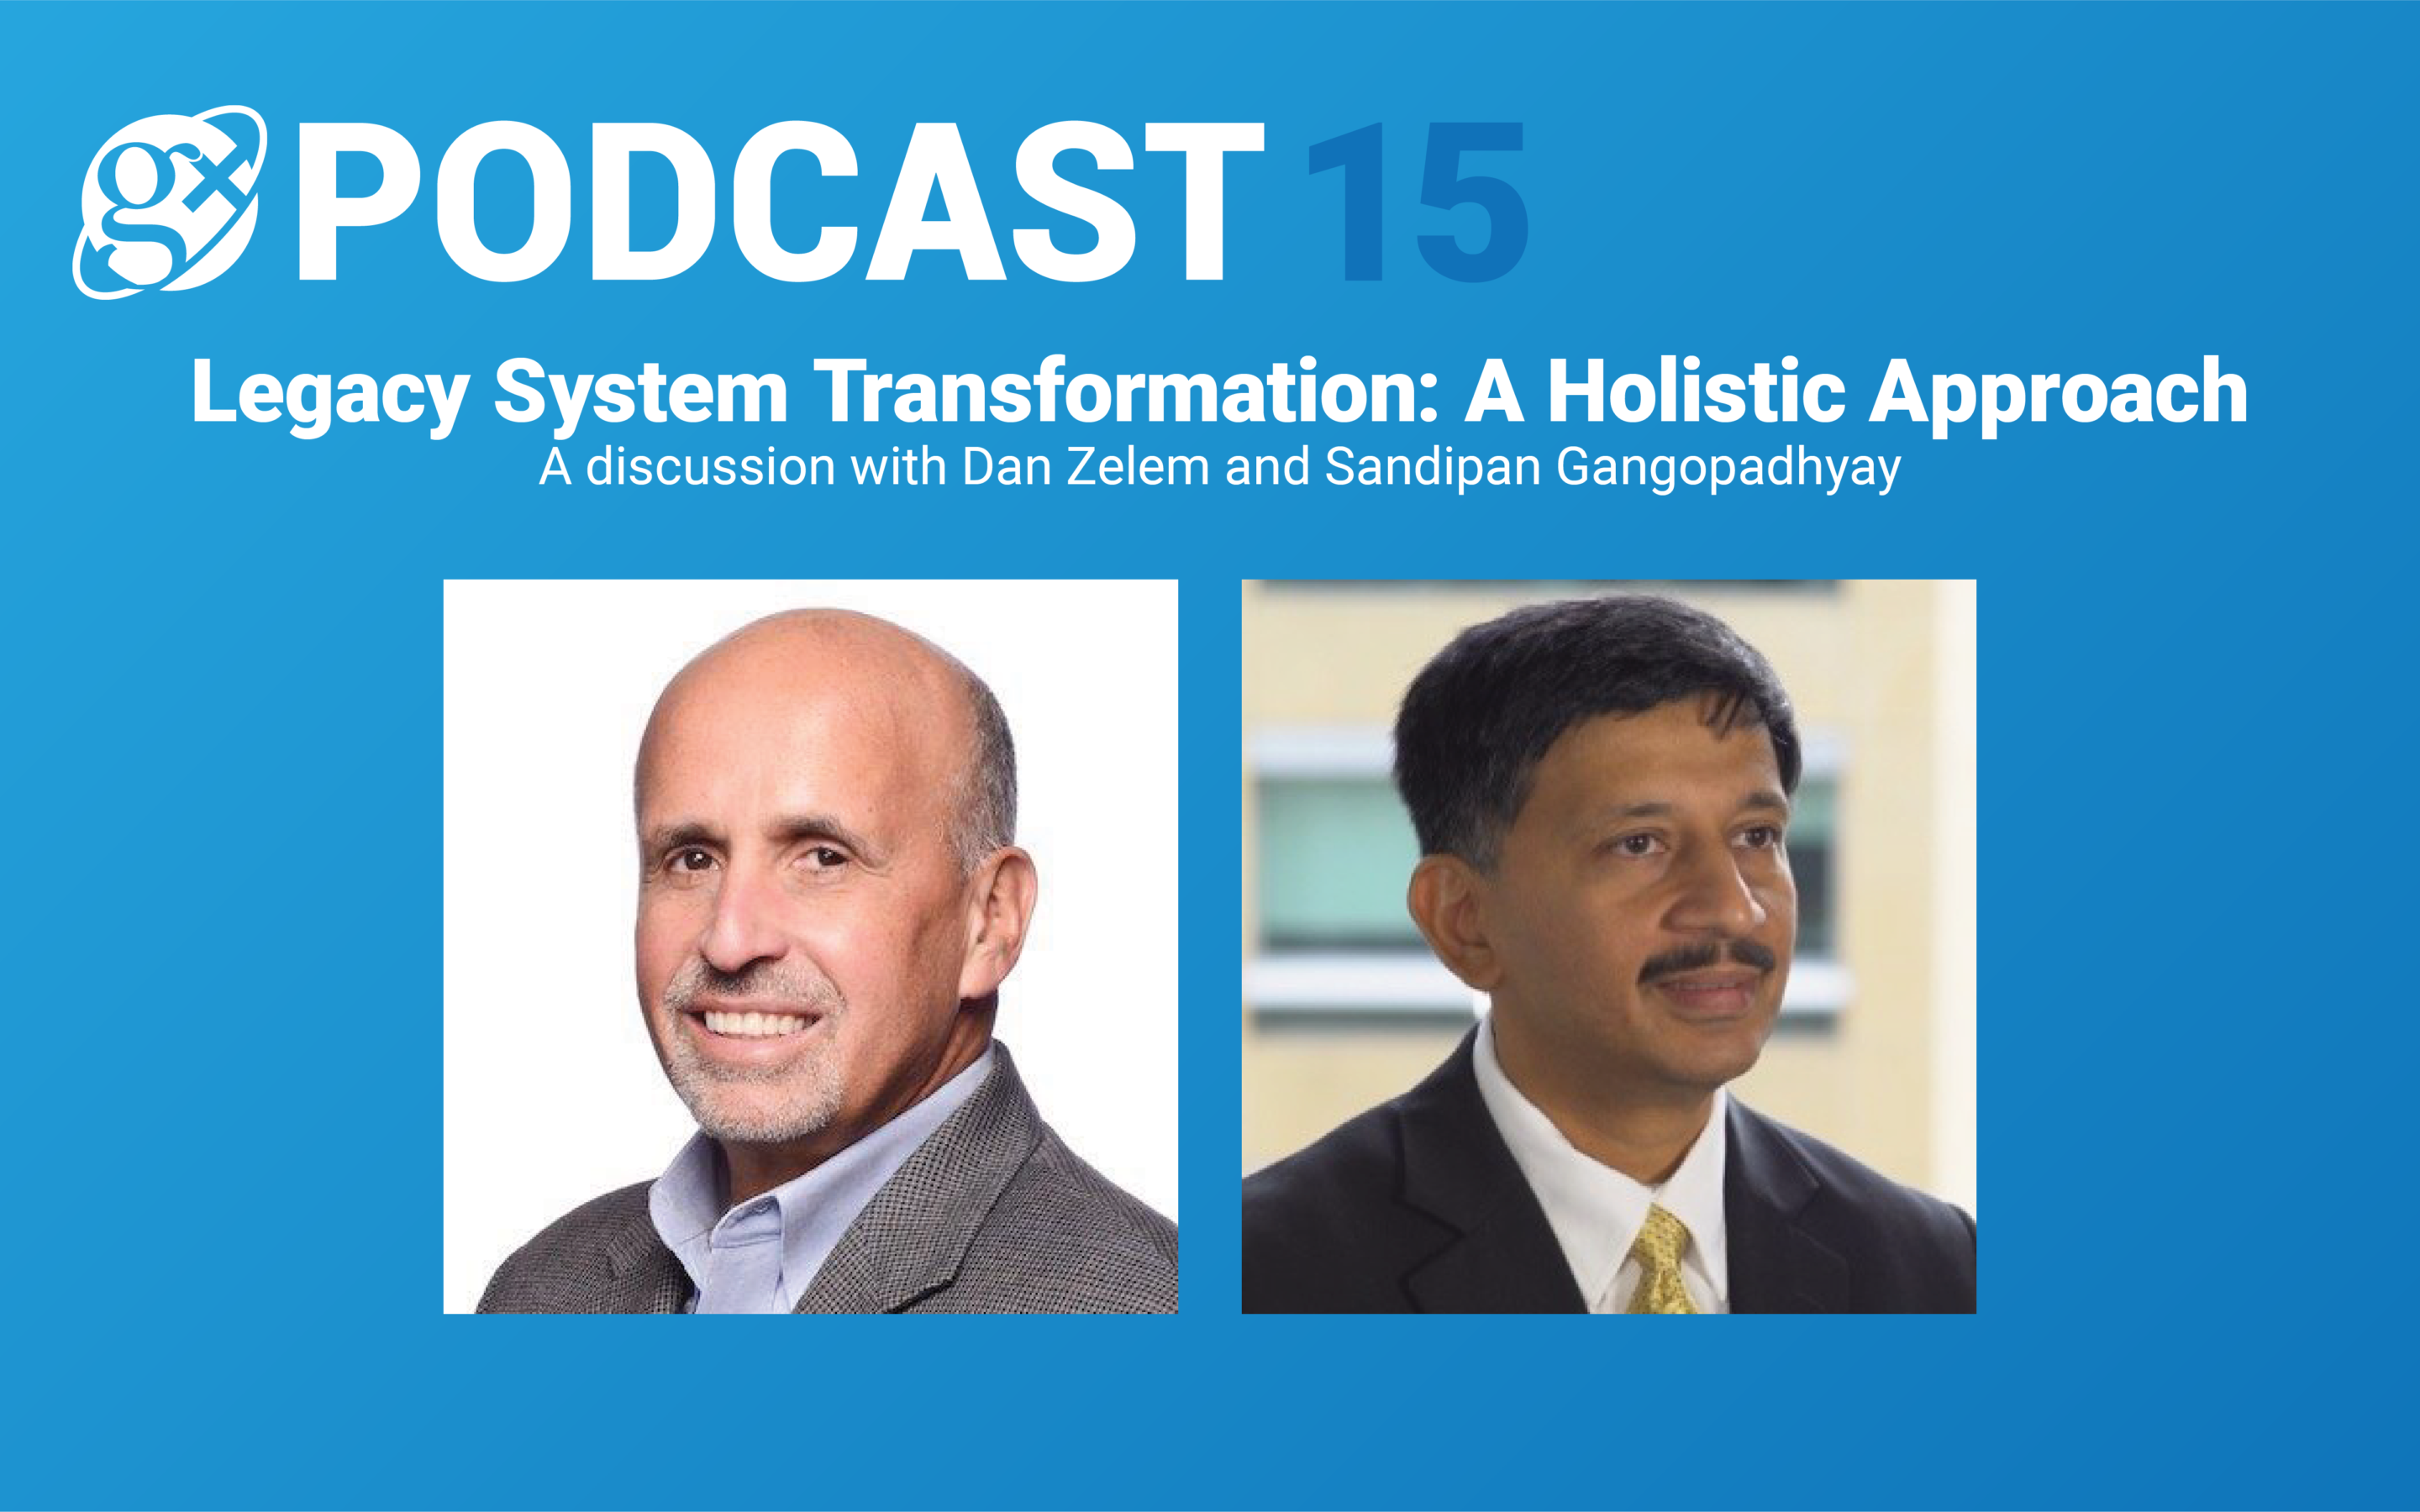 Gx Podcast 15: Legacy System Transformation: A Holistic Approach